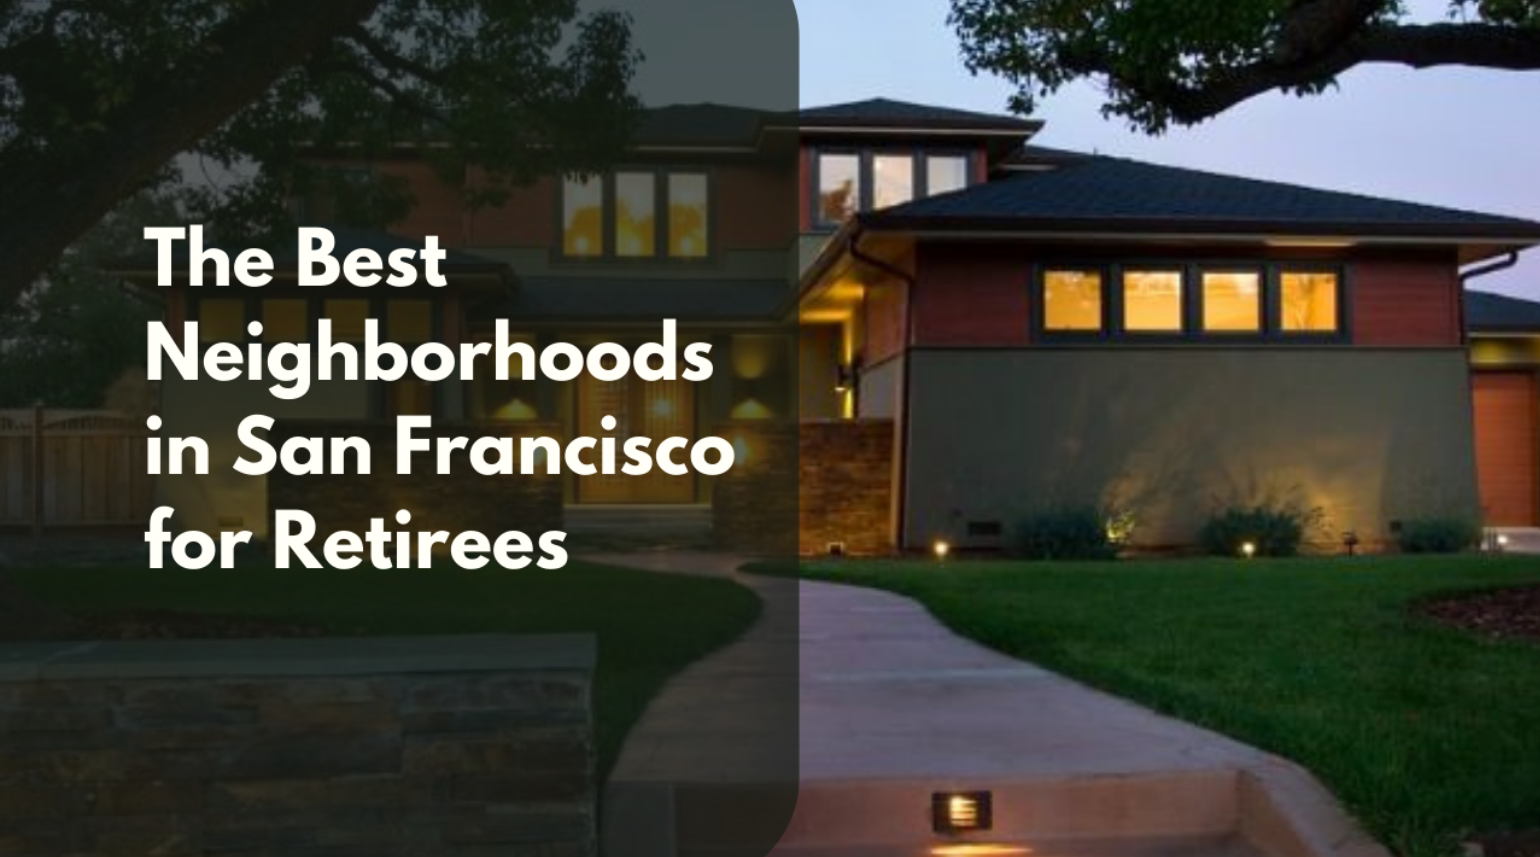 The Best Neighborhoods in San Francisco for Retirees